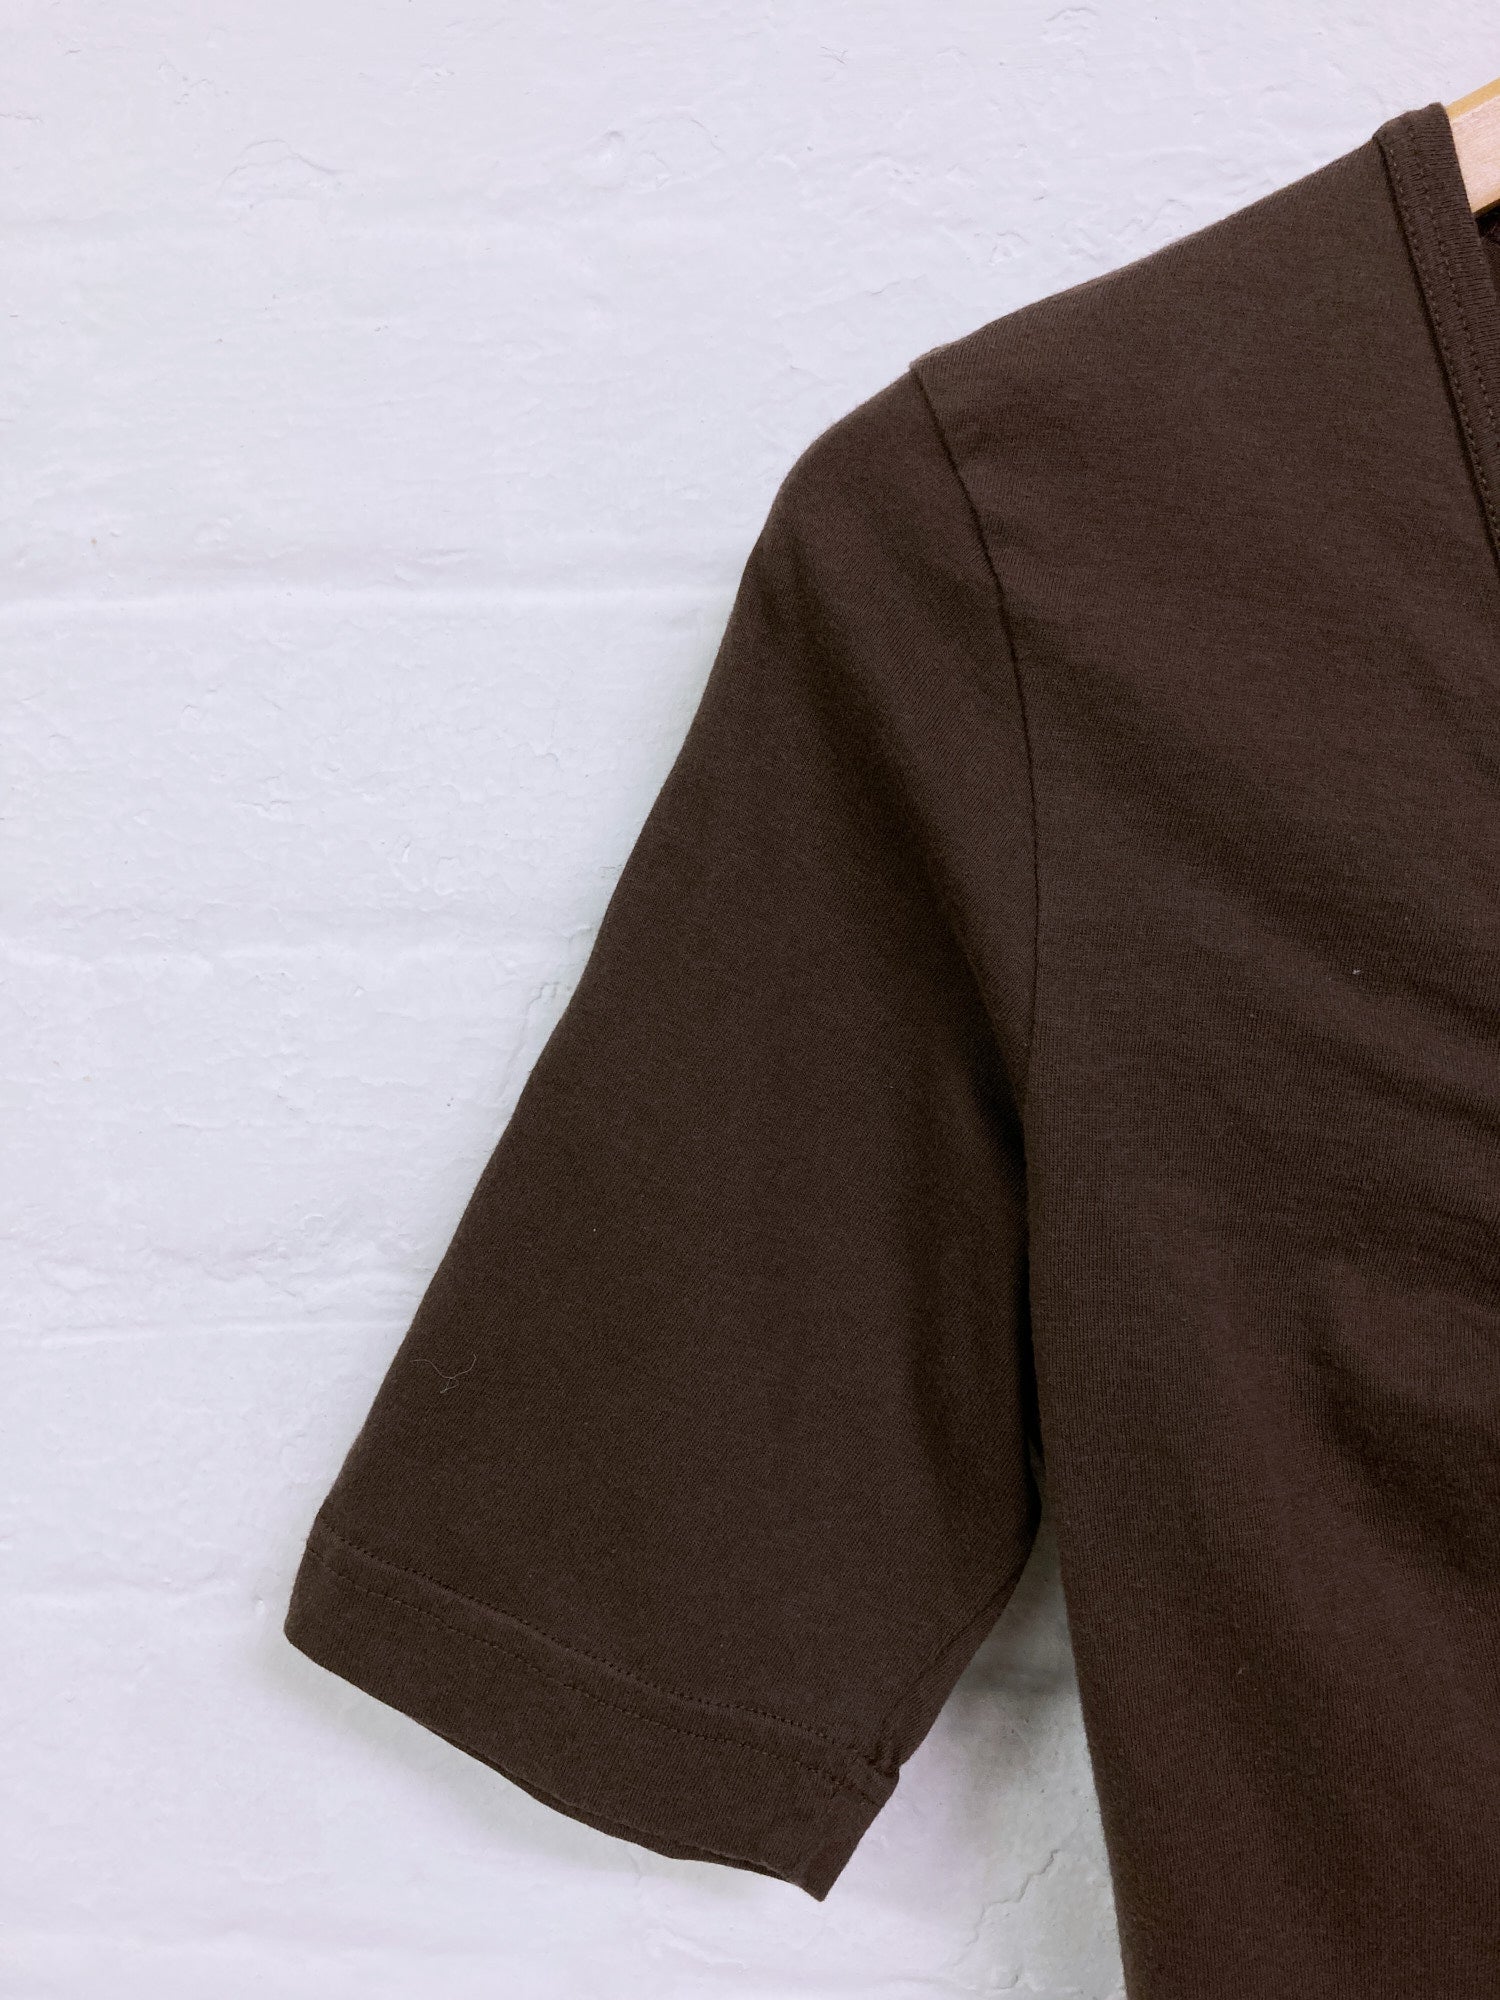 Jean Colonna brown cotton jersey short sleeve v-neck dress - size 40